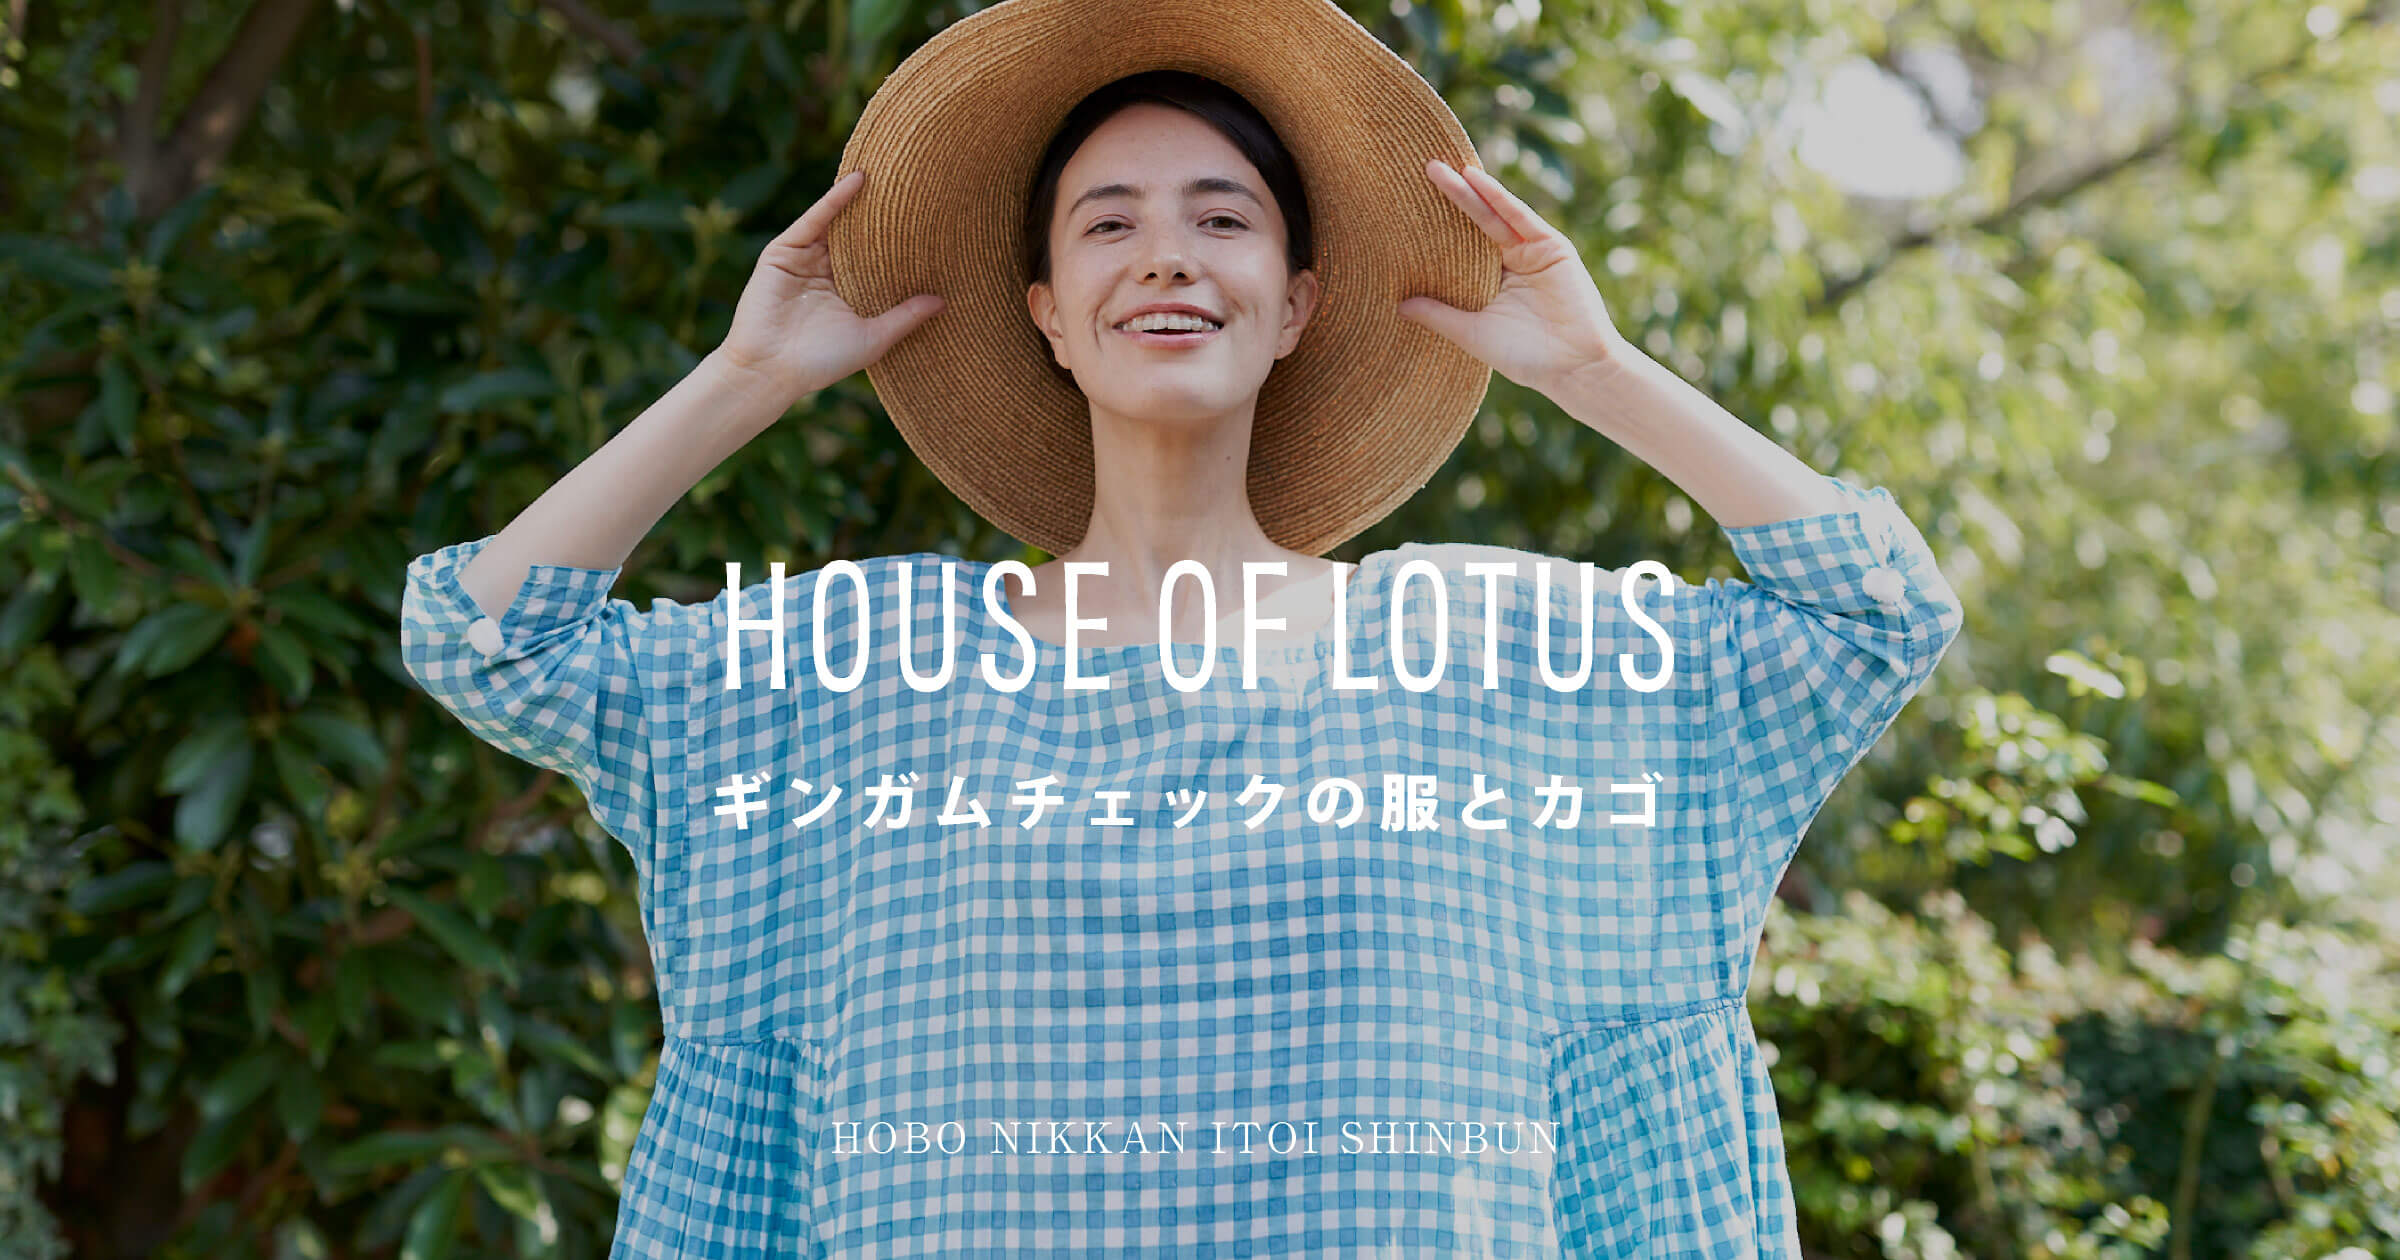 HOUSE OF LOTUS -ギンガムチェックの服とカゴ-